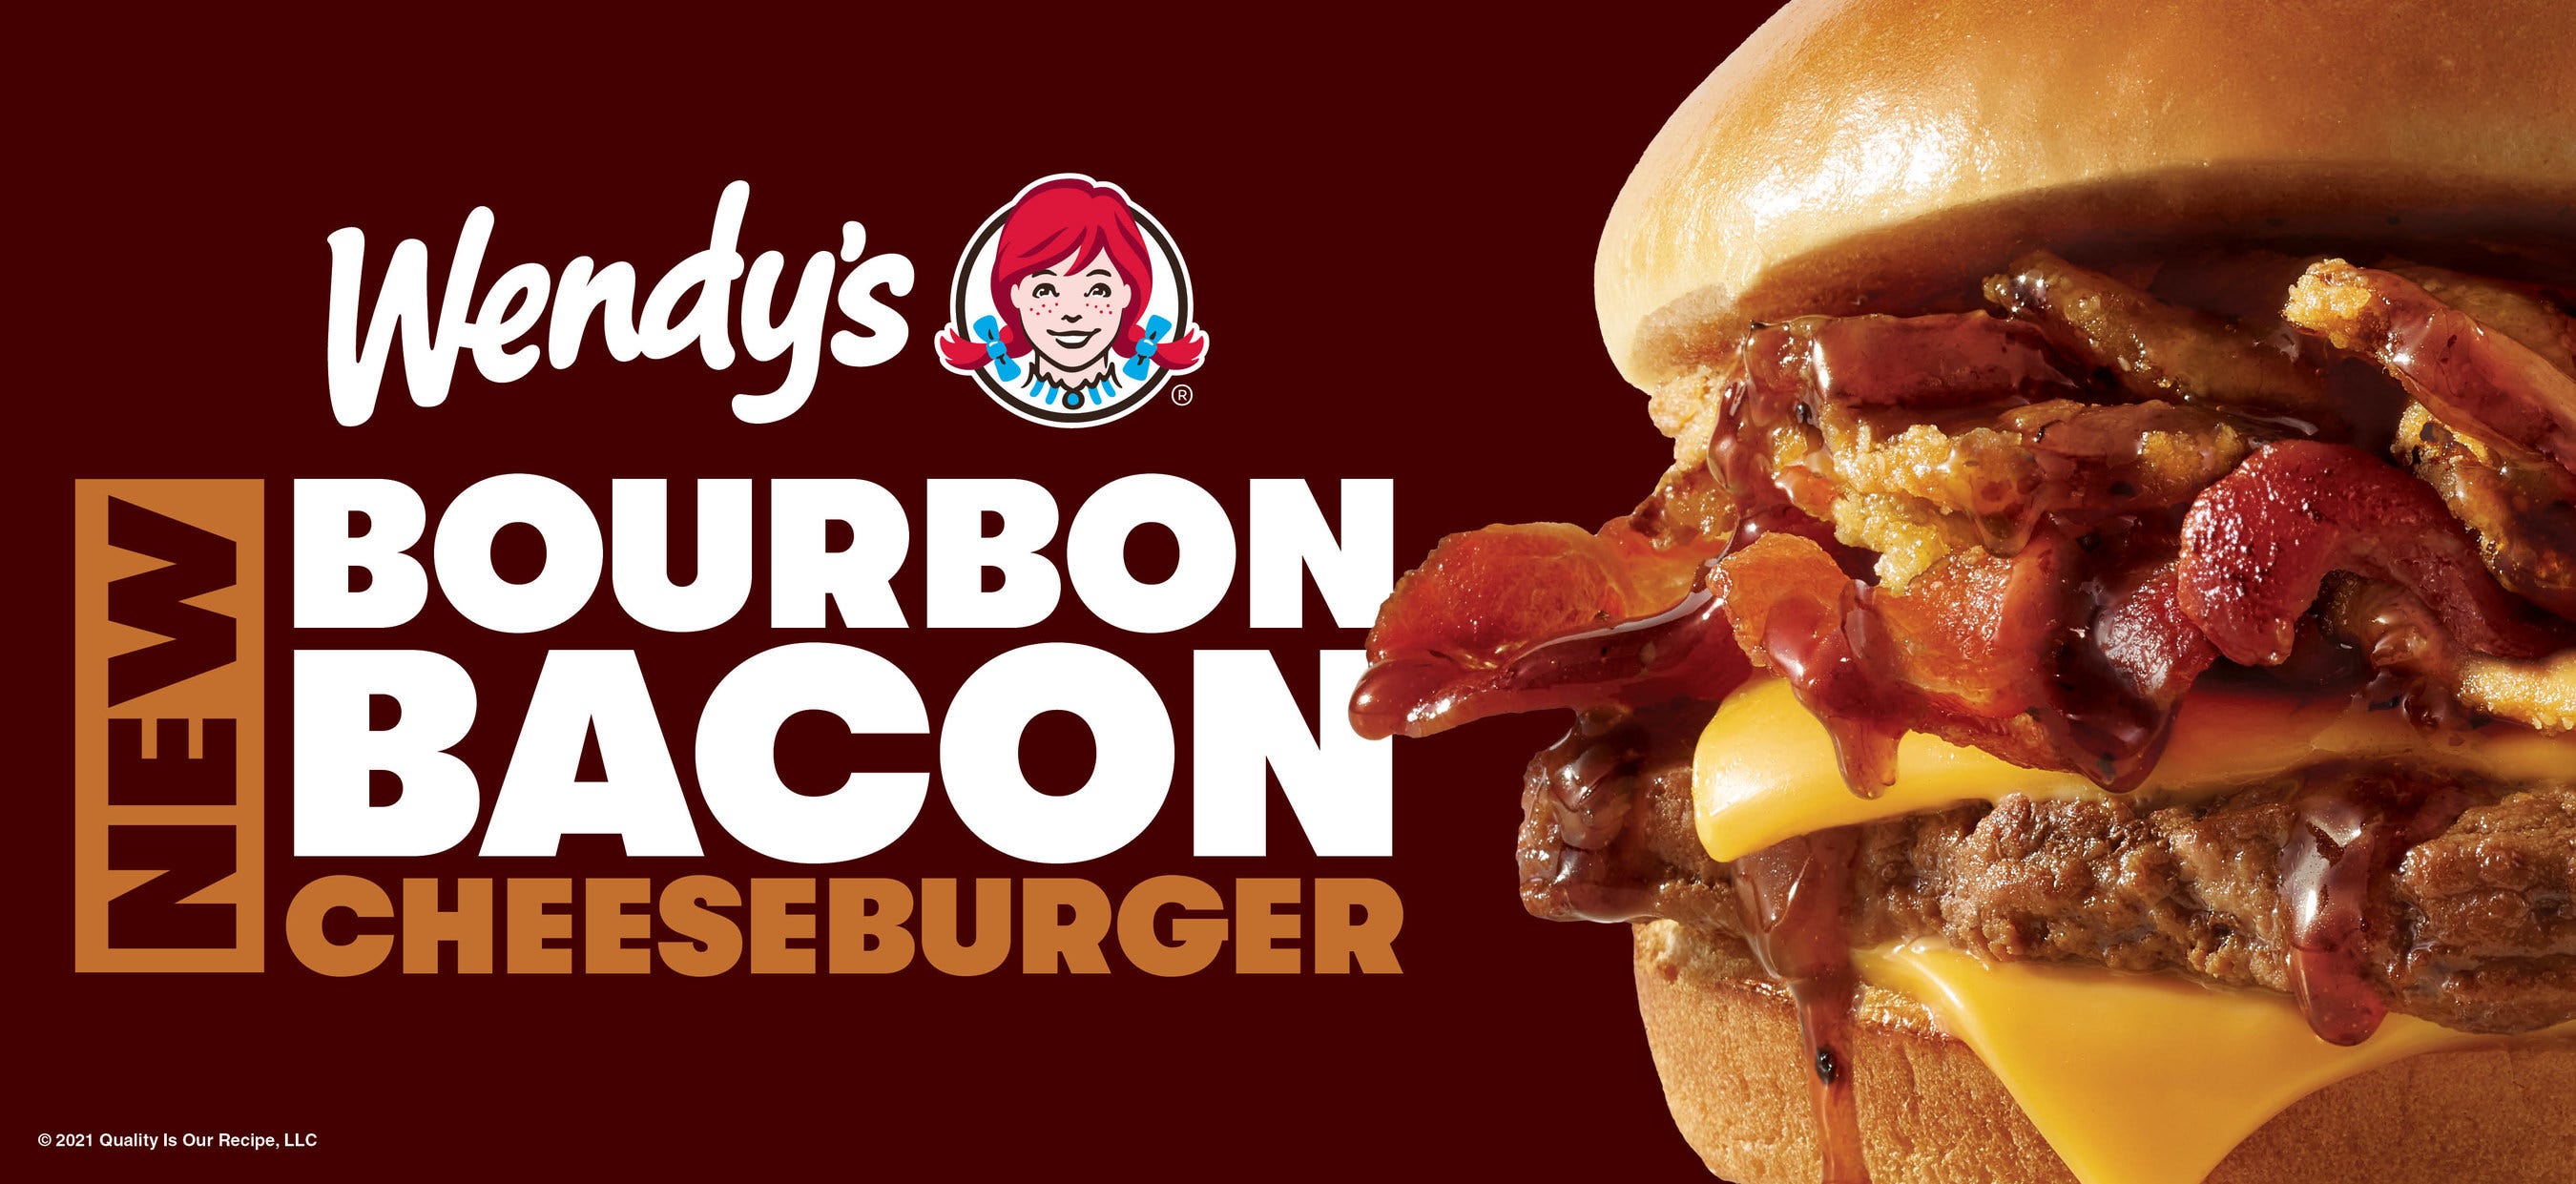 Wendy's Adds Bourbon Bacon Cheeseburger To Menu